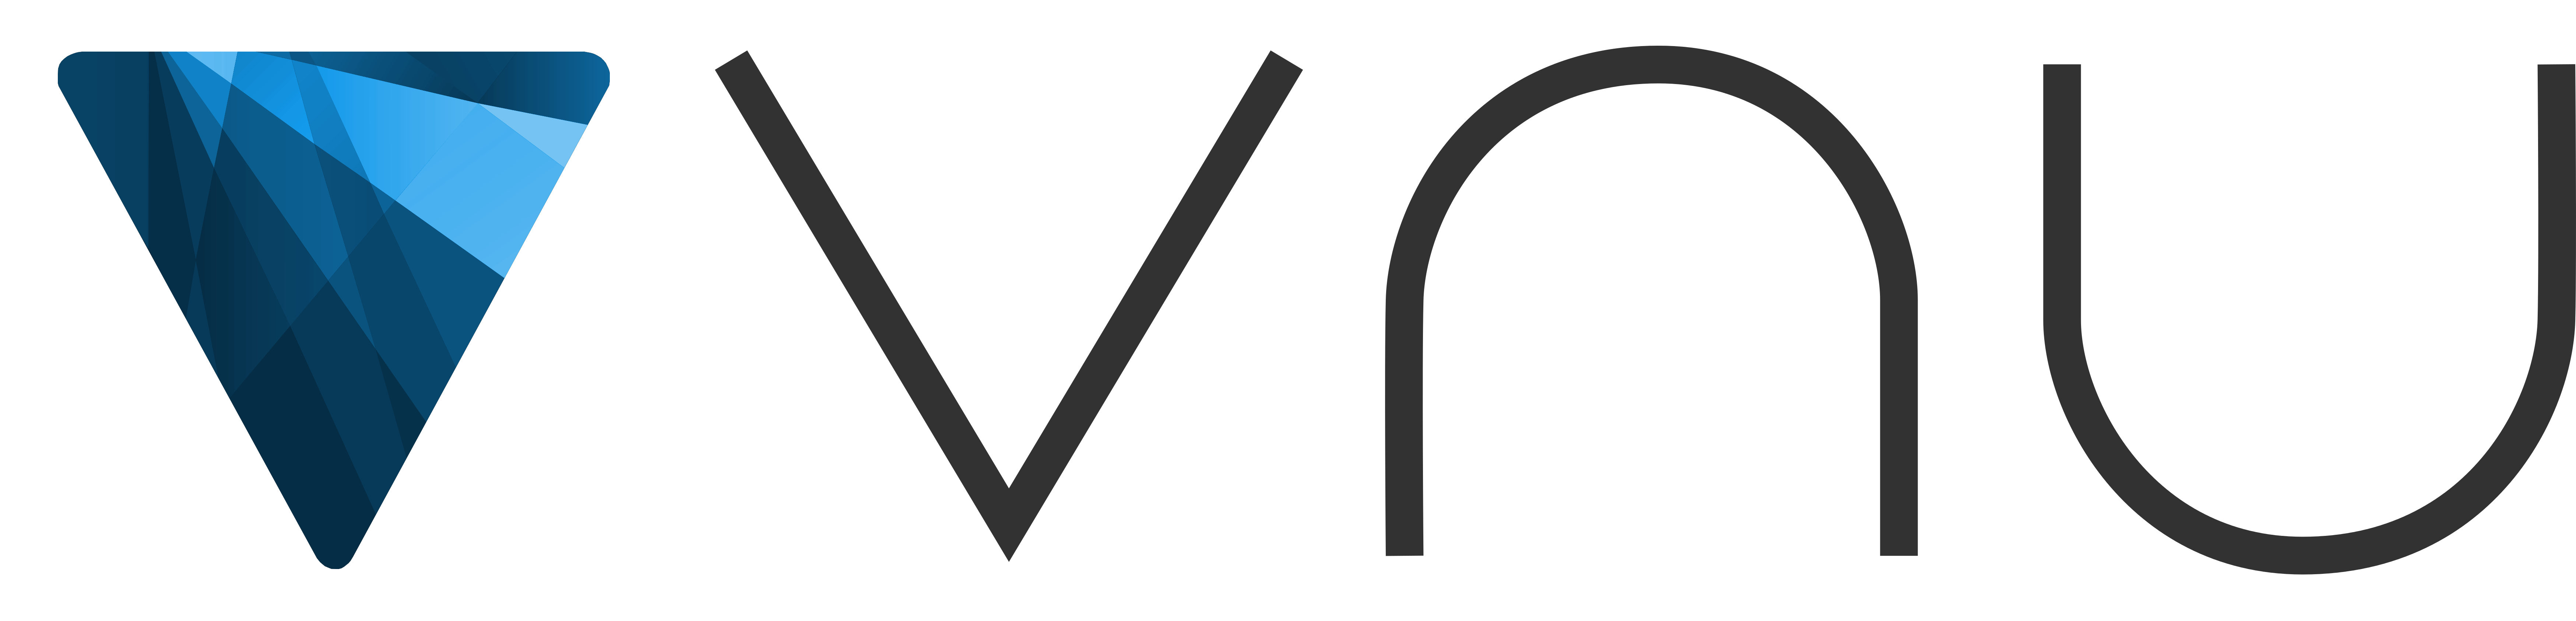 vnu logo